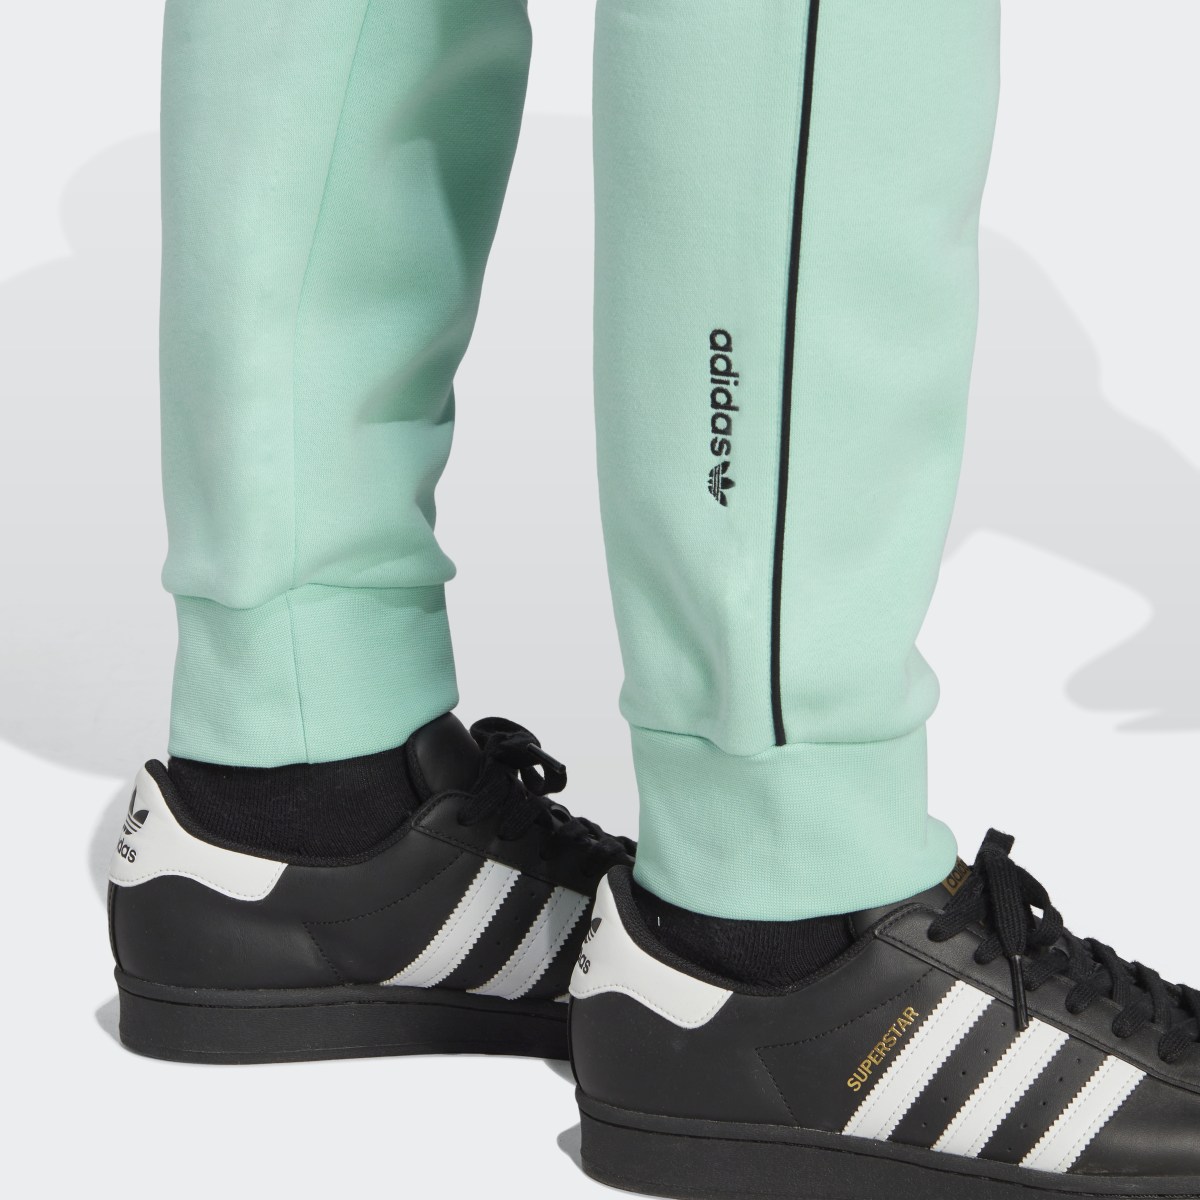 Adidas Pantalon de survêtement Adicolor Seasonal Archive. 5